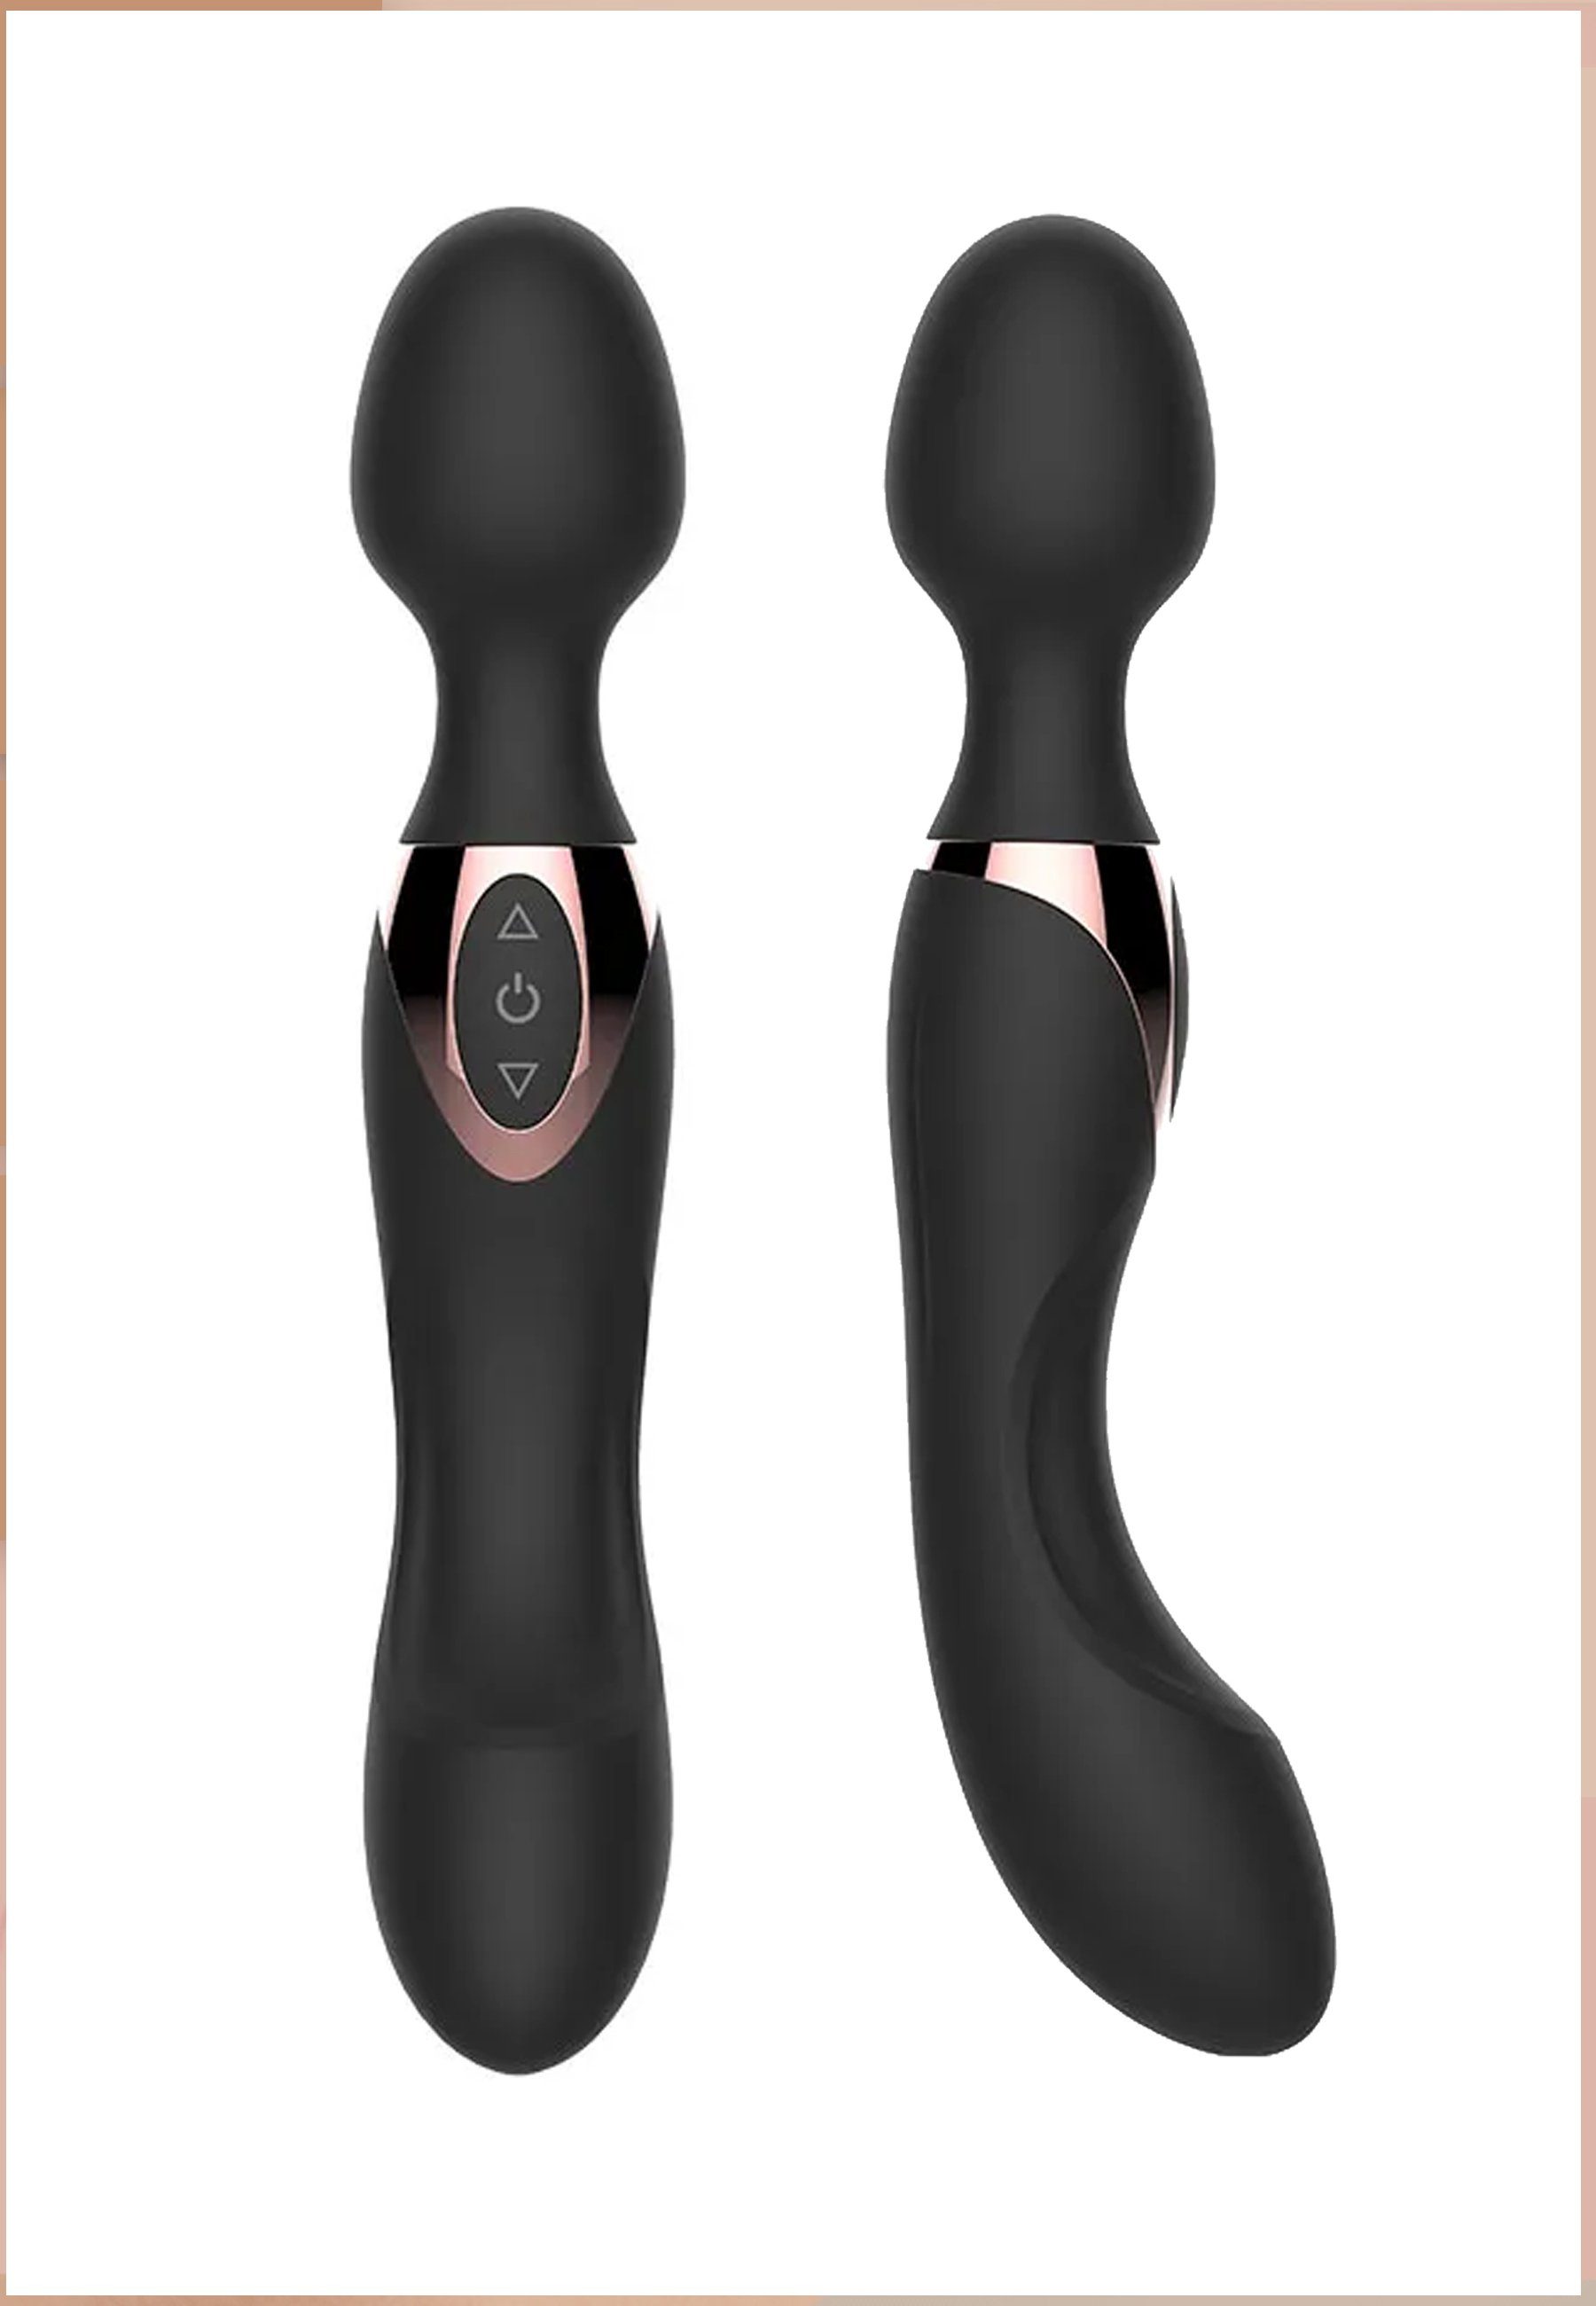 Dildo Design Stimulation Vibrator, Vibrator Super Orgasmen Topseller Klitoris Luxuriöses #1